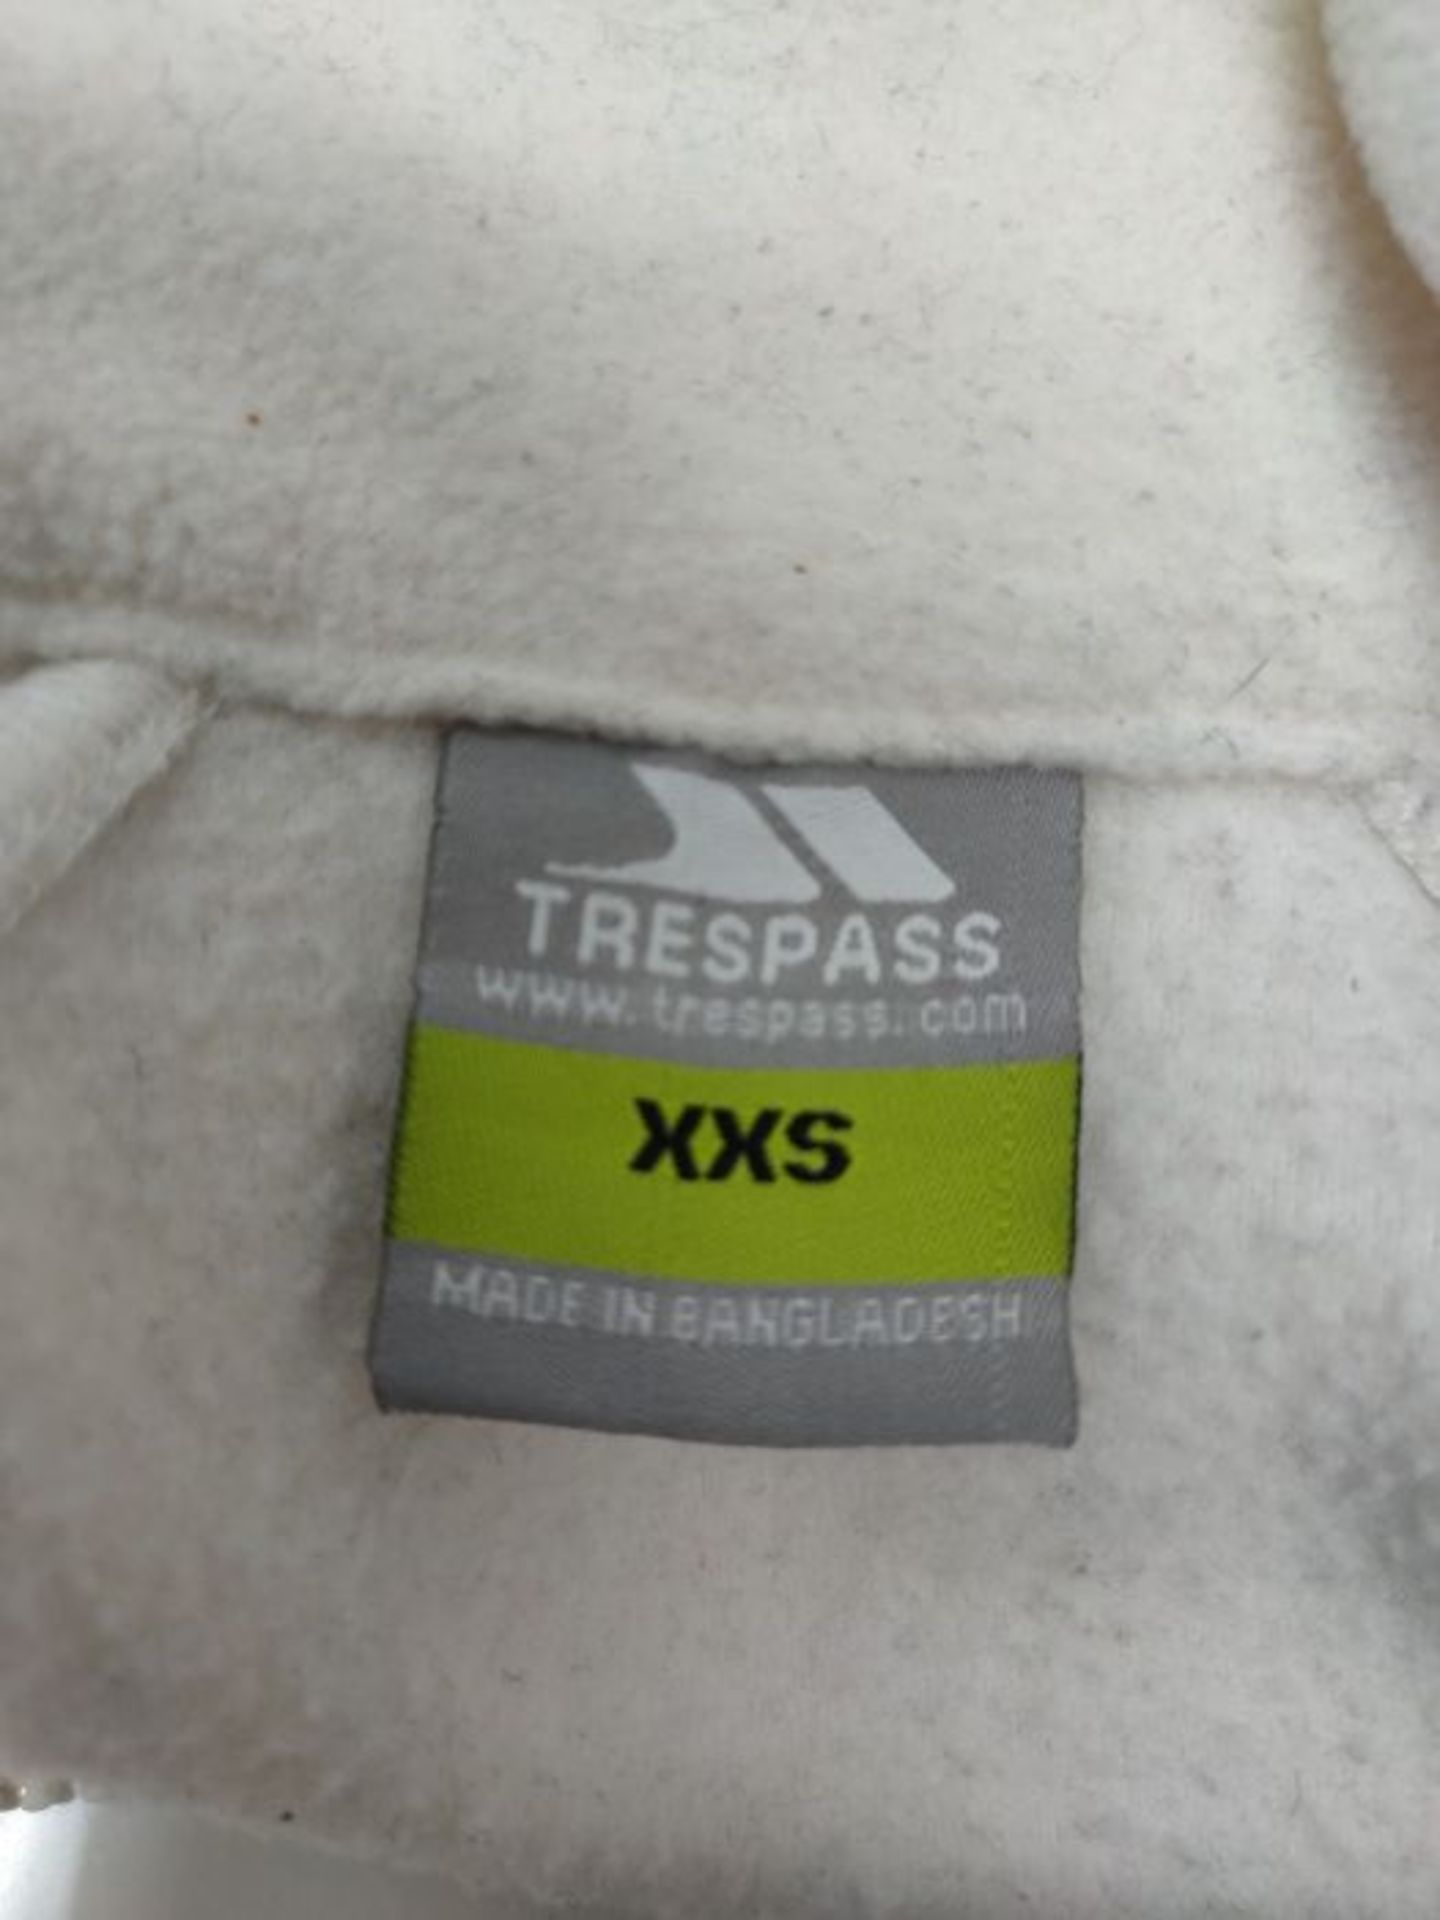 Trespass Clarice, Ghost, XXS, Warm Fleece Jacket 280gsm for Women, XX-Small / 2X-Small - Image 3 of 3